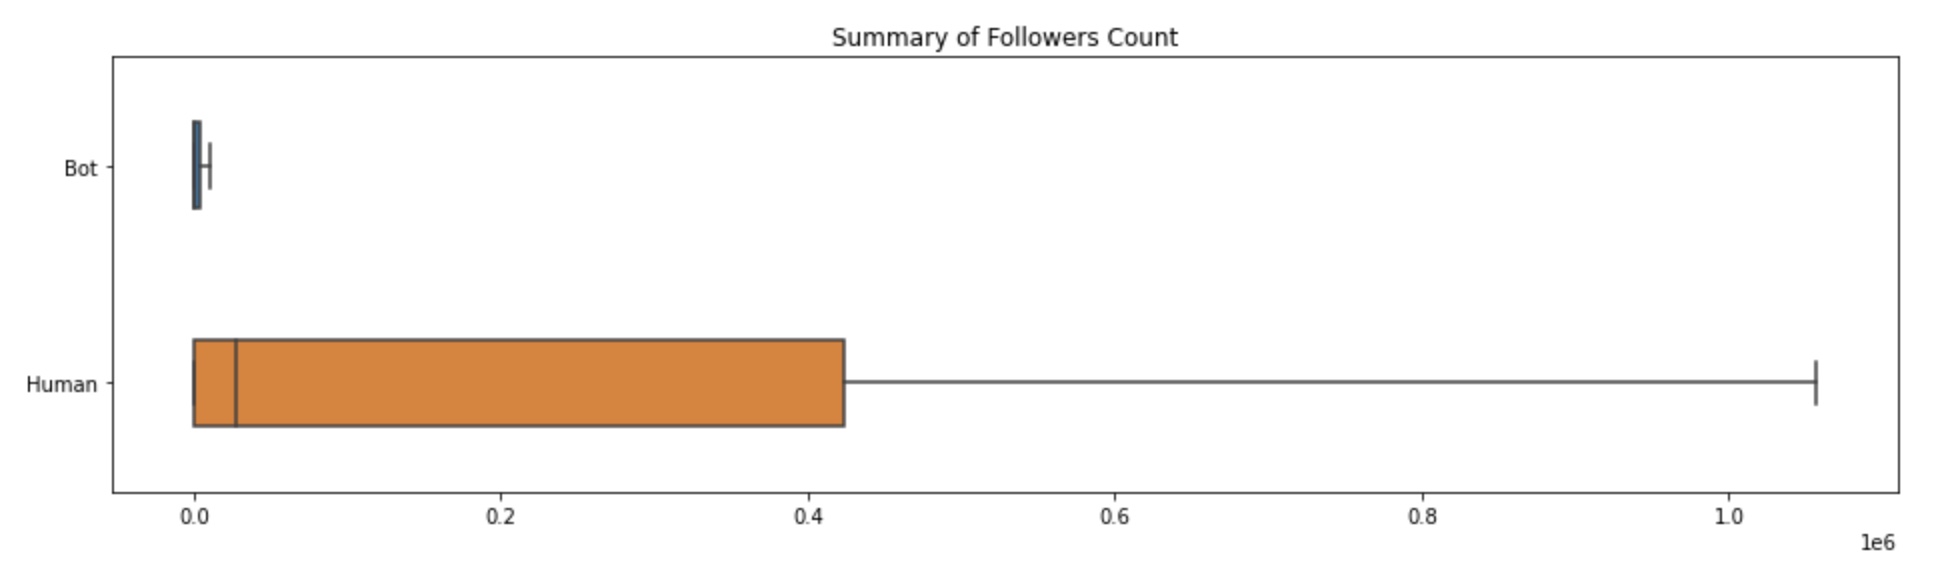 Summary of Followers Count